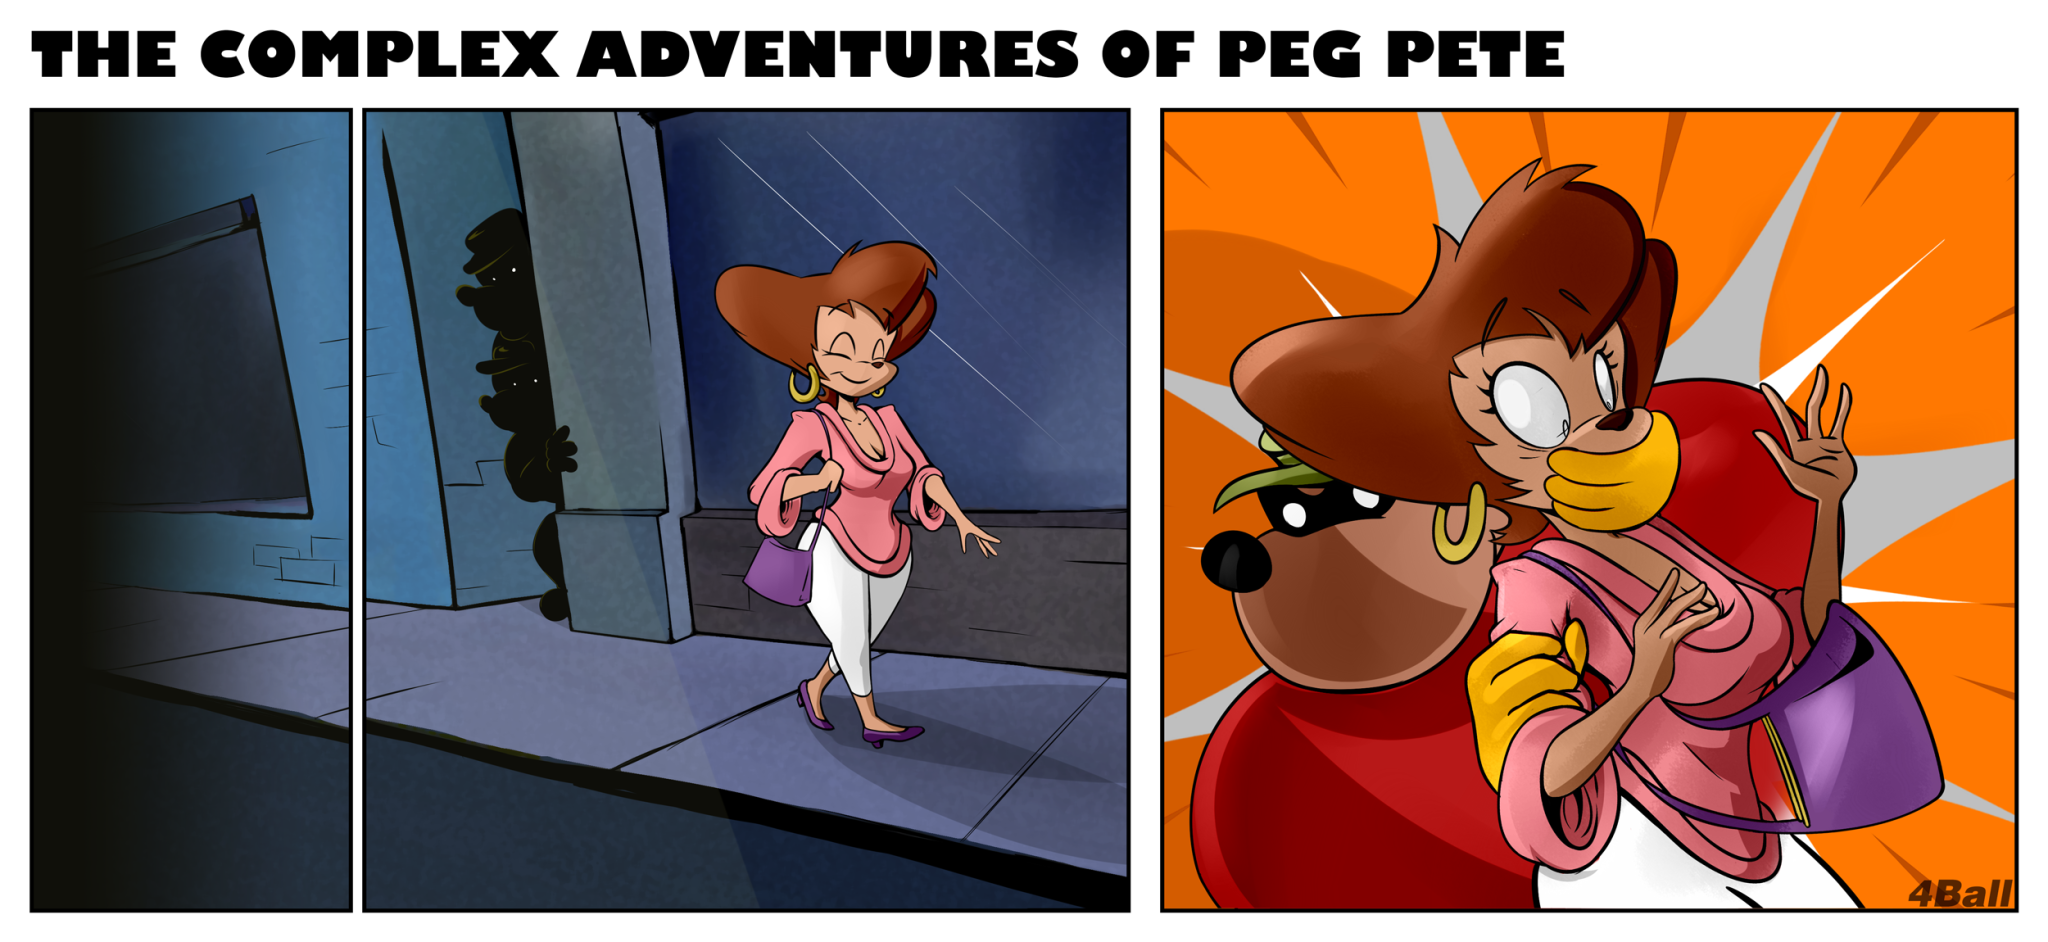 The Complex Adventures of Peg Pete